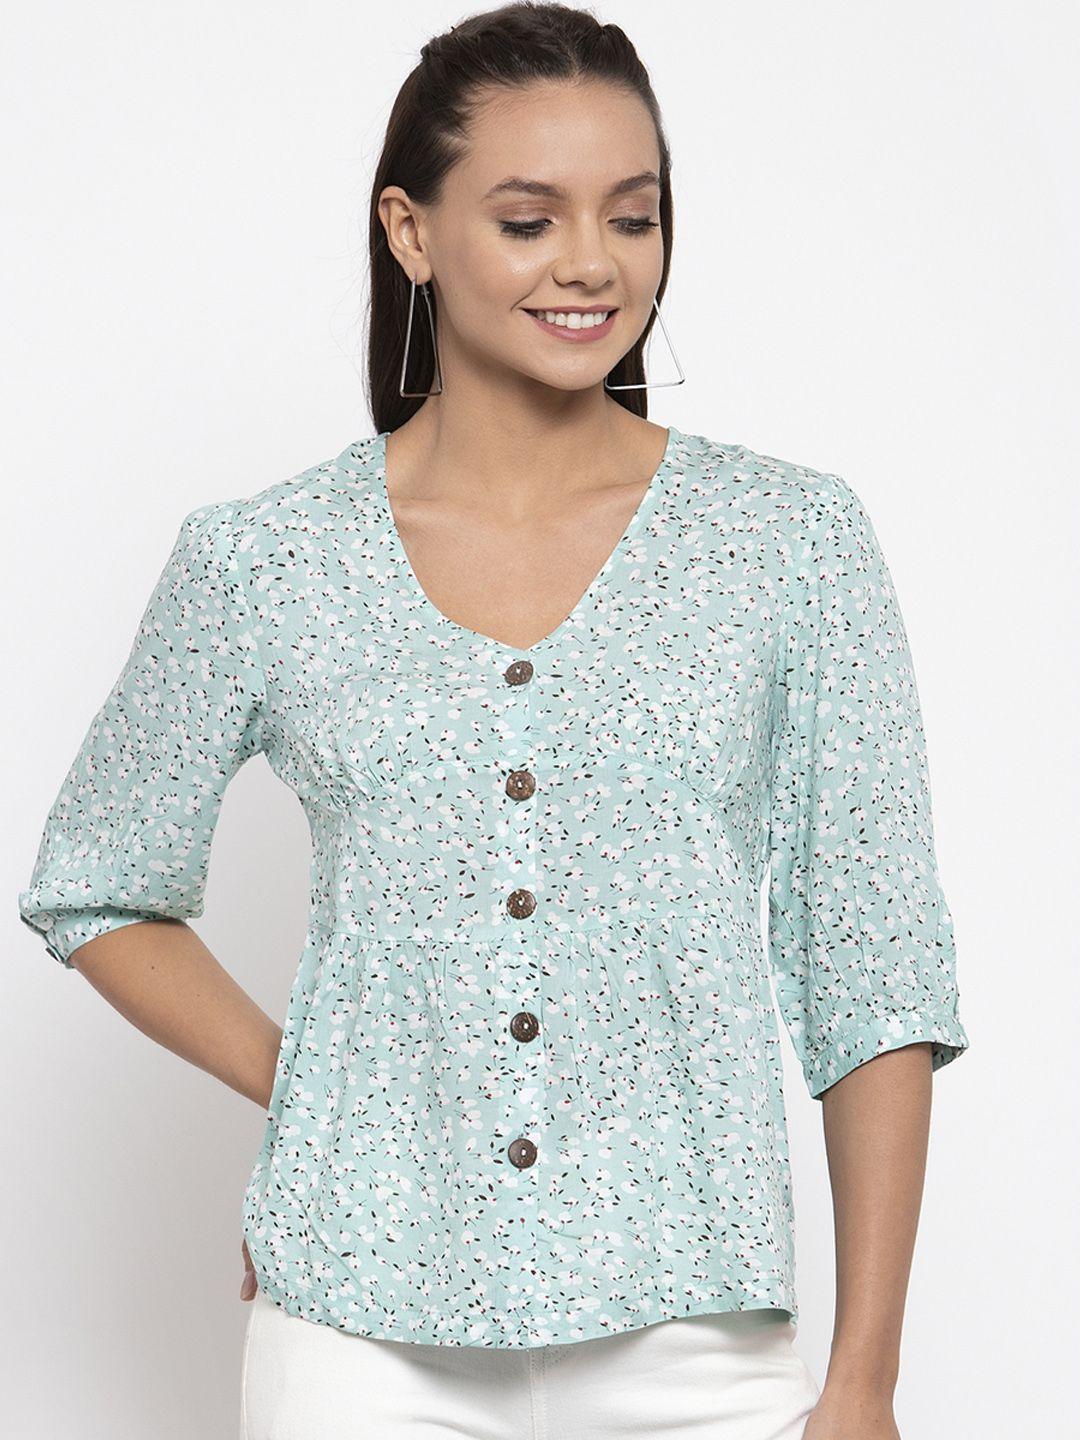 gipsy women sea green & white printed shirt style top